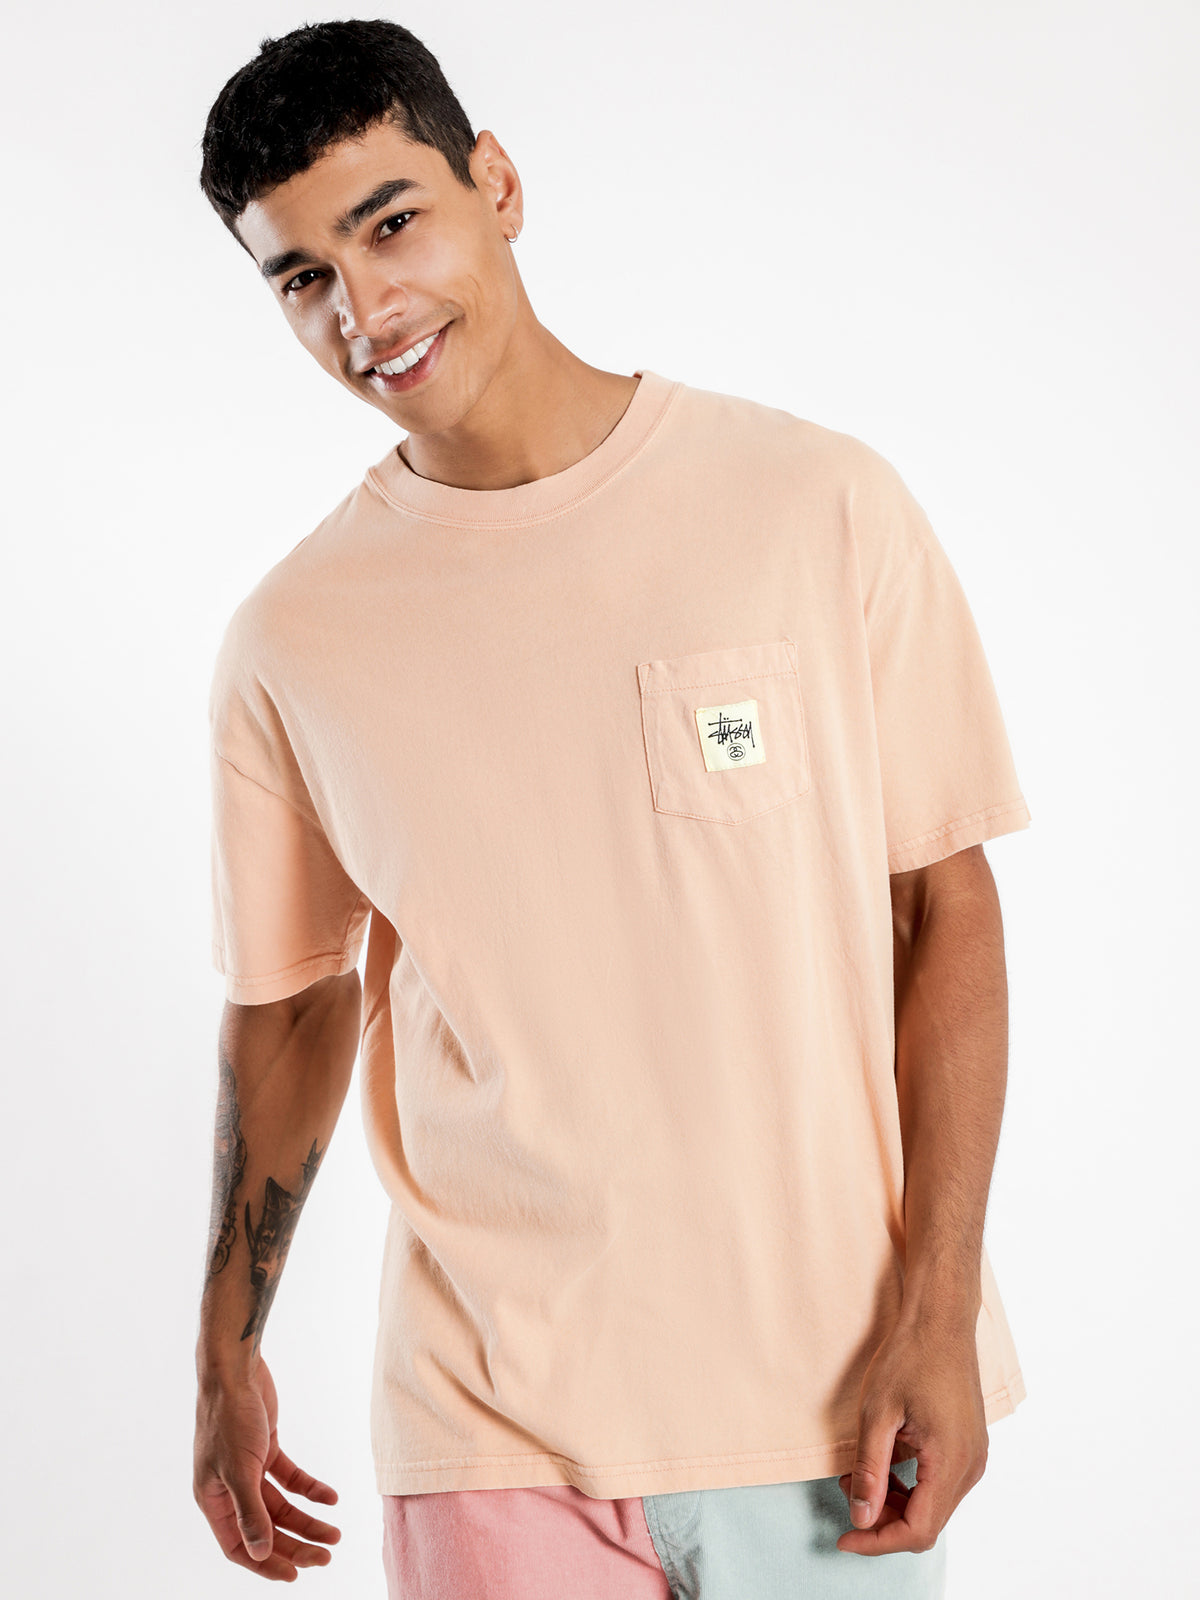 Graffiti Link Pocket Short Sleeve T-Shirt in Apricot